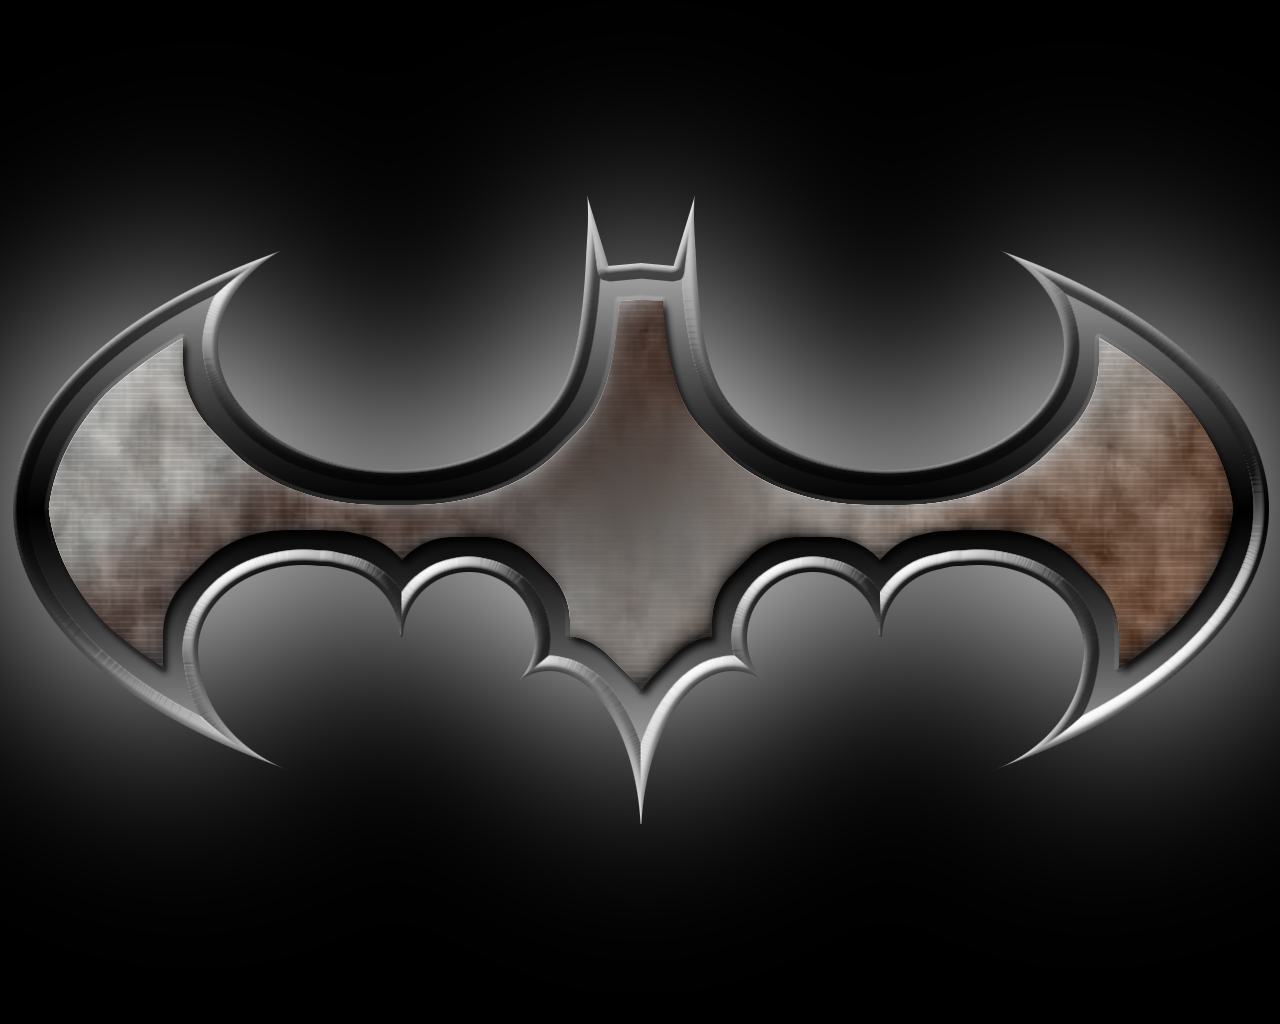 Latest Cinema News: Download Free Batman Logos